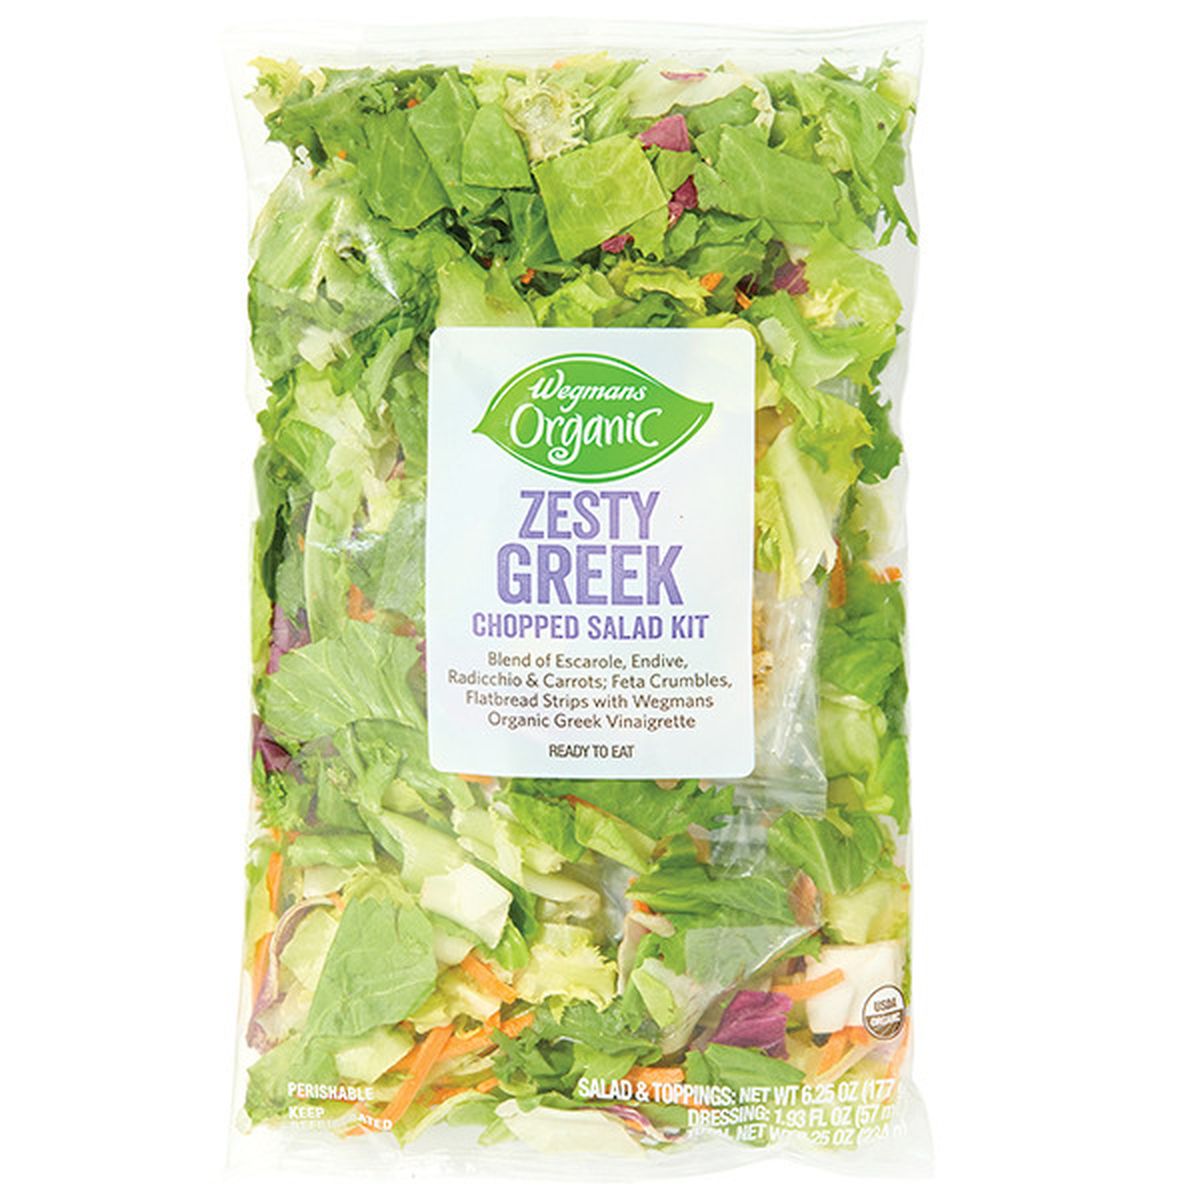 Calories in Wegmans Organic Zesty Greek Chopped Salad Kit